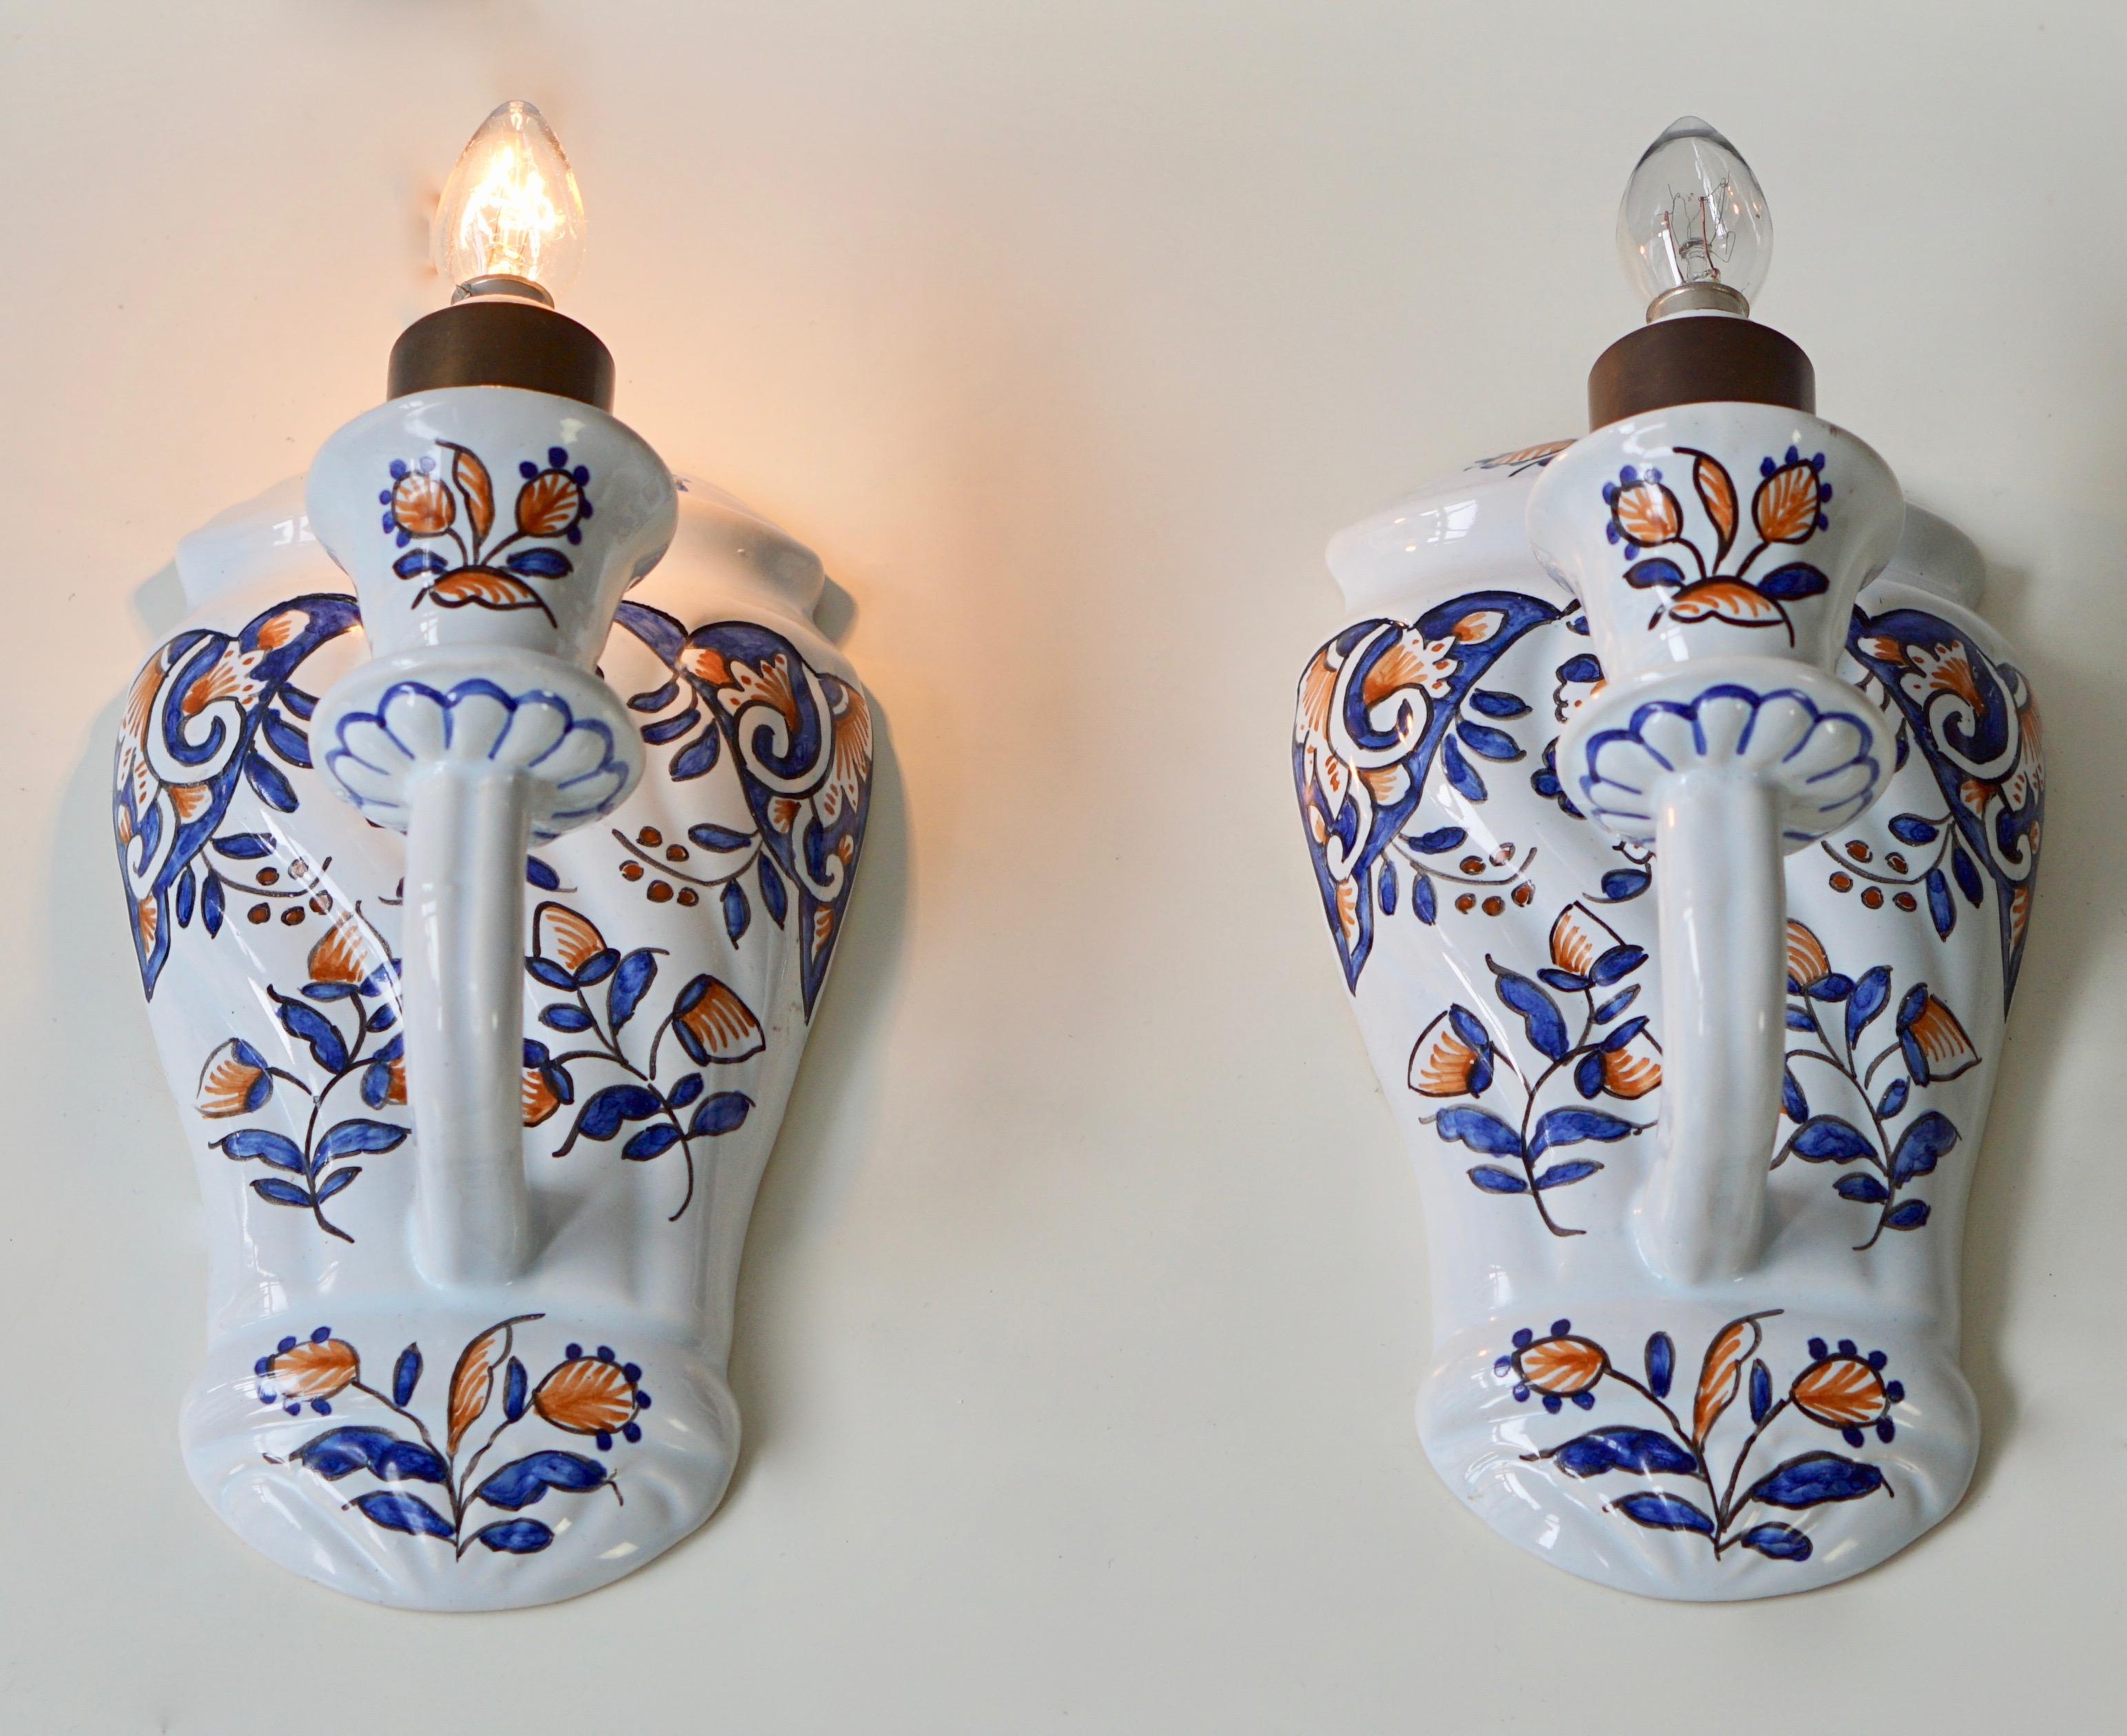 Pair of porcelain flower scones.
Measures: Width 11 cm.
Height 20 cm.
Depth 11 cm.
One E14 bulb.